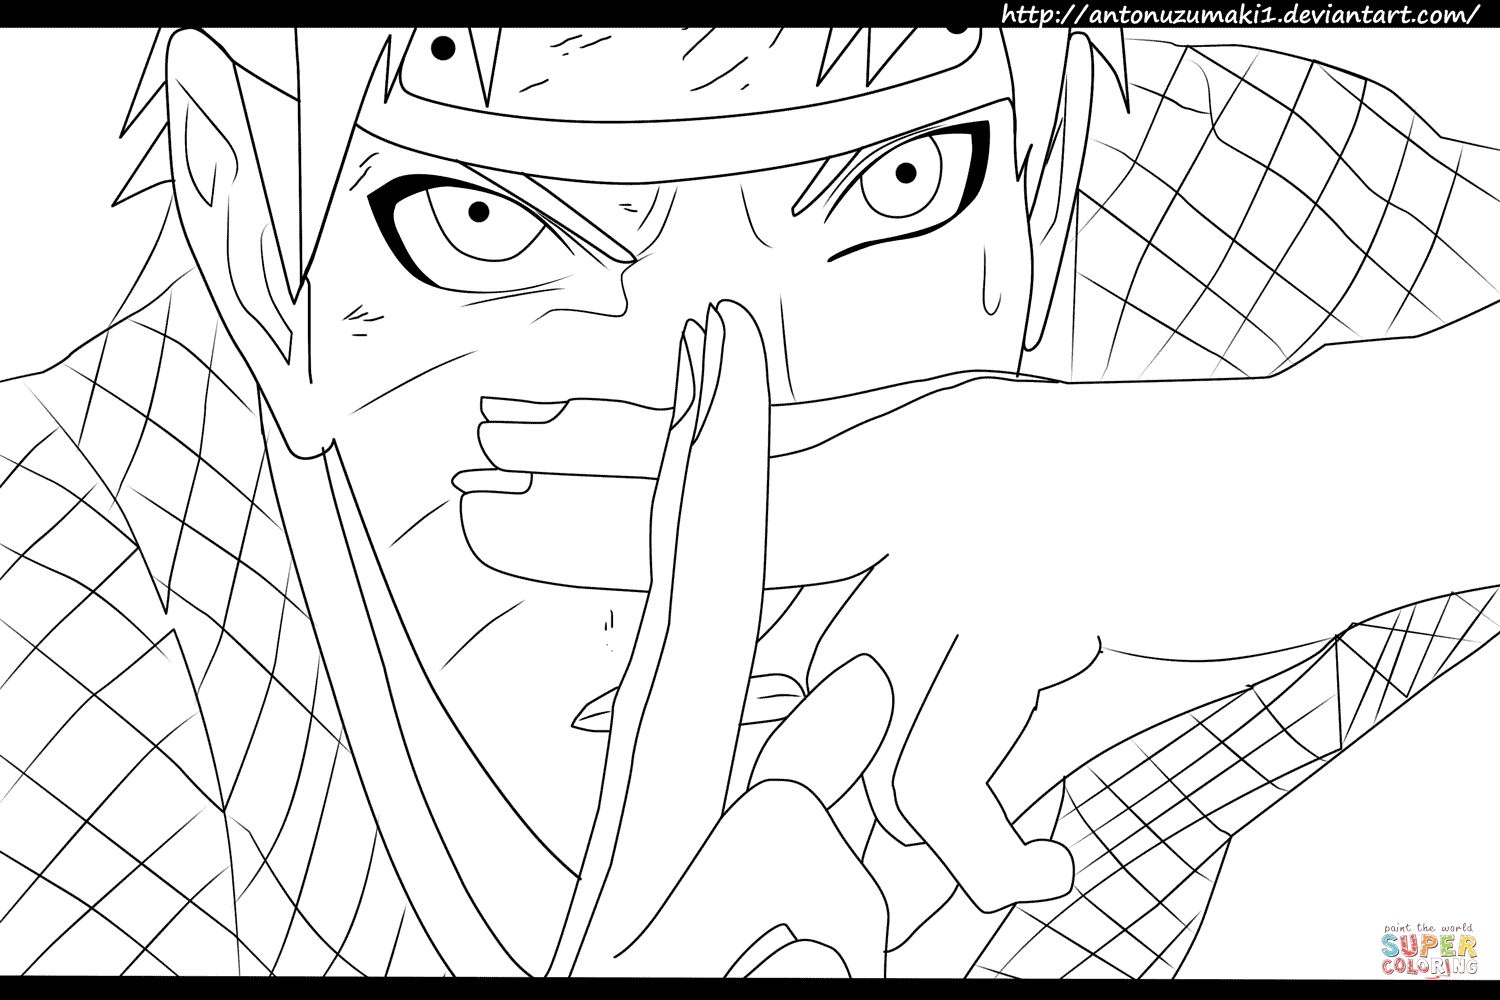 Naruto naruto vs sasuke coloring page free printable coloring pages